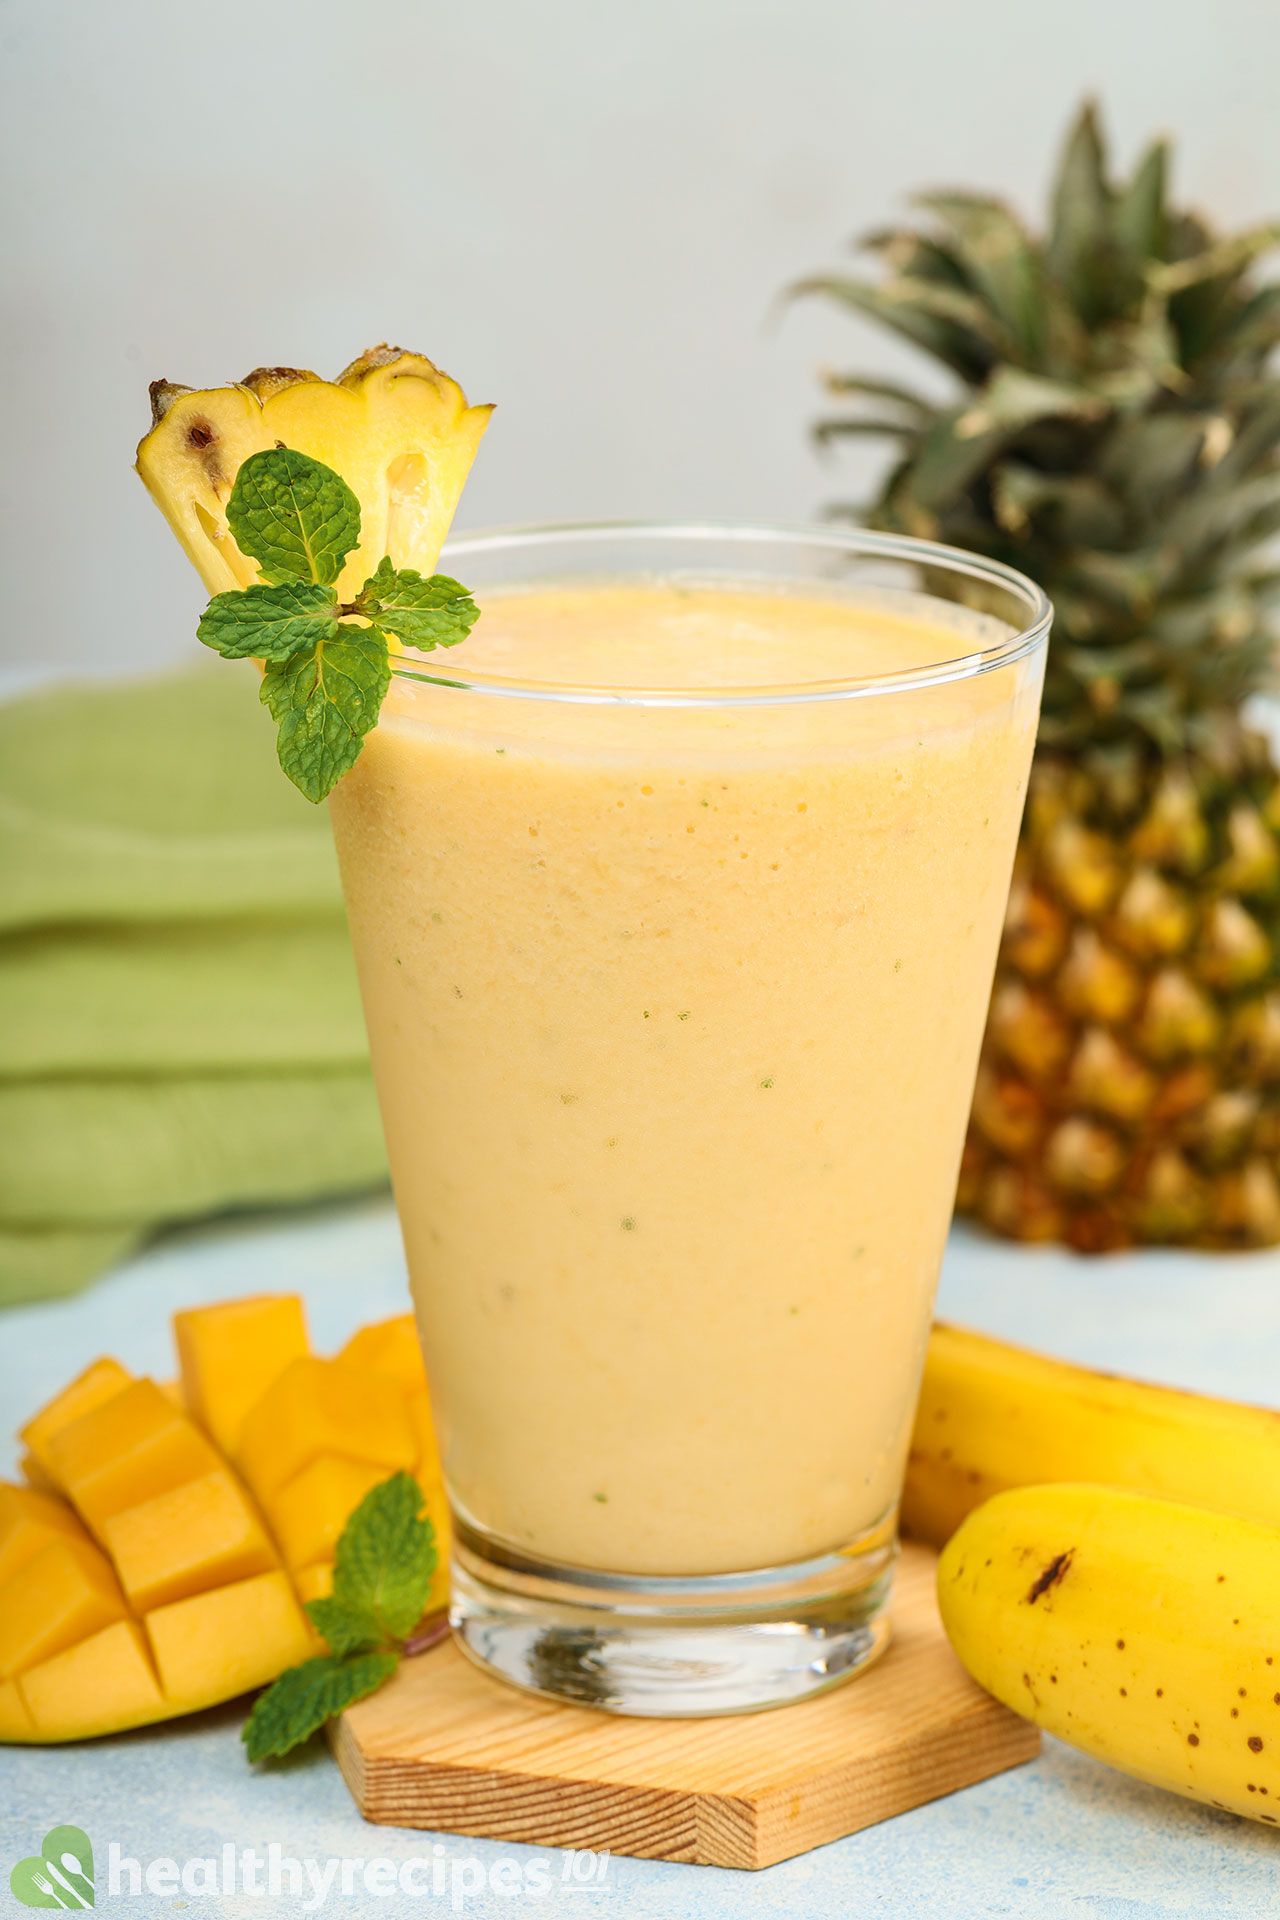 Homemade Mango Pineapple Banana Smoothie Recipe